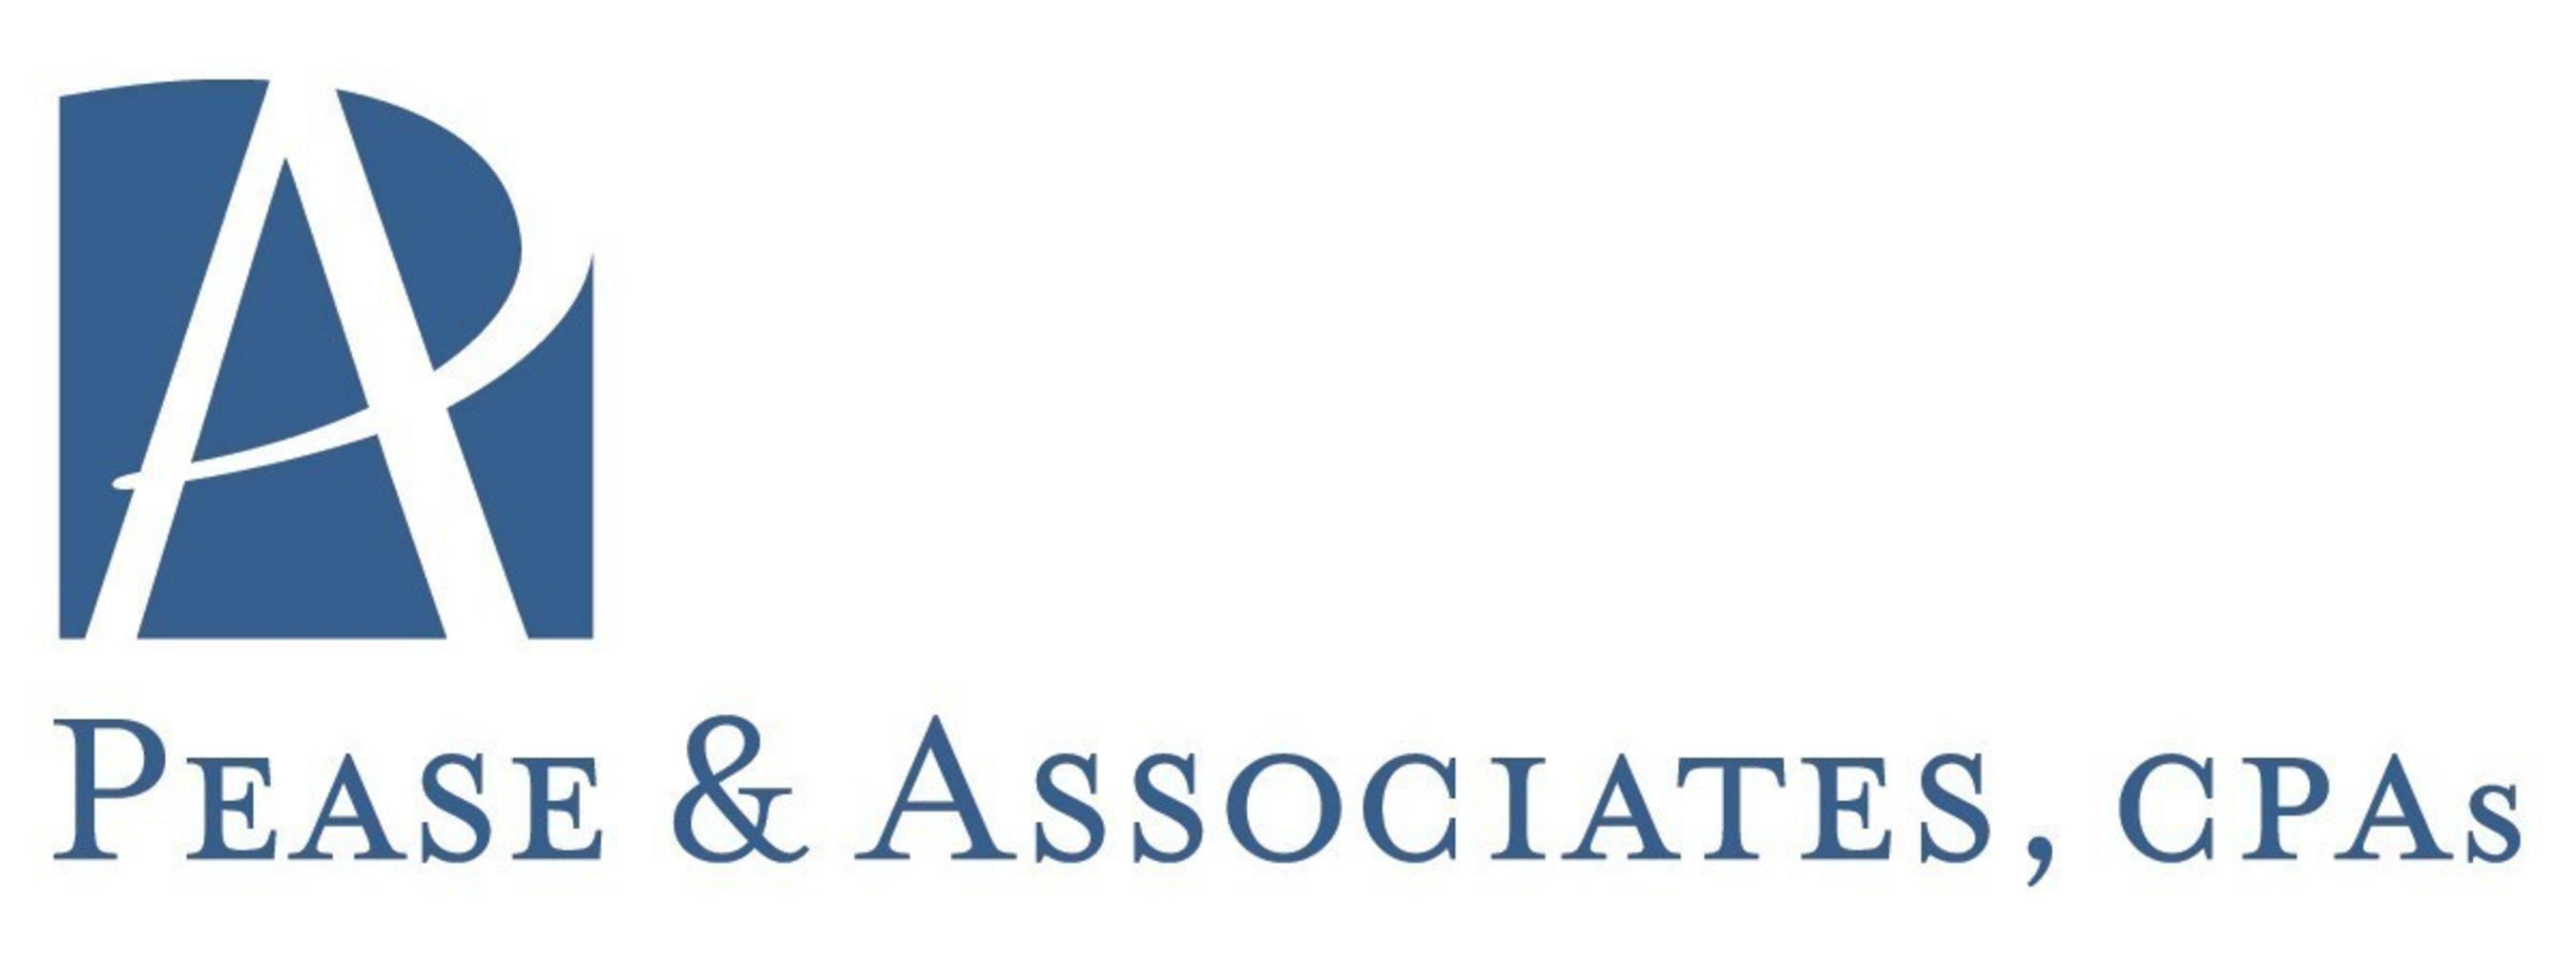 Pease & Associates logo